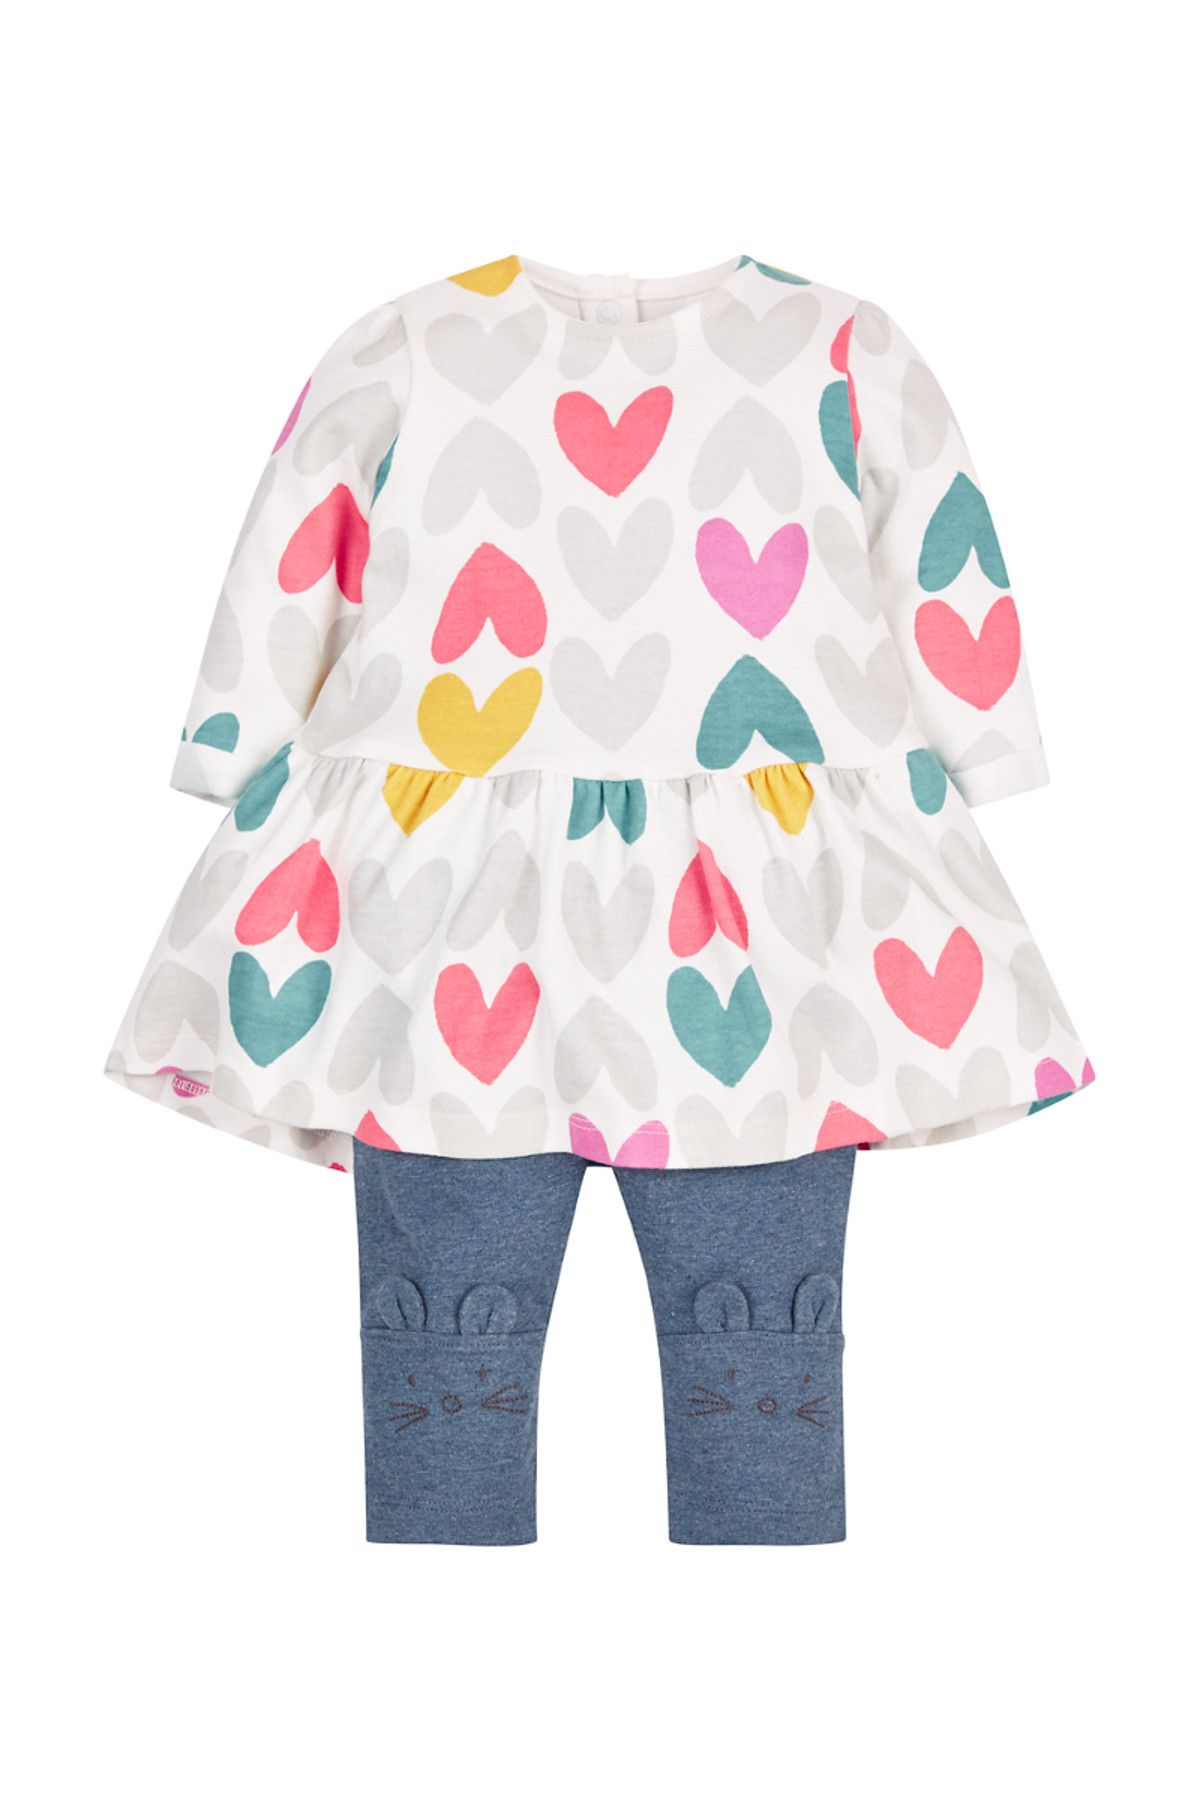 Mothercare Renkli Kız Bebek Elbise Tayt Takım Jf806